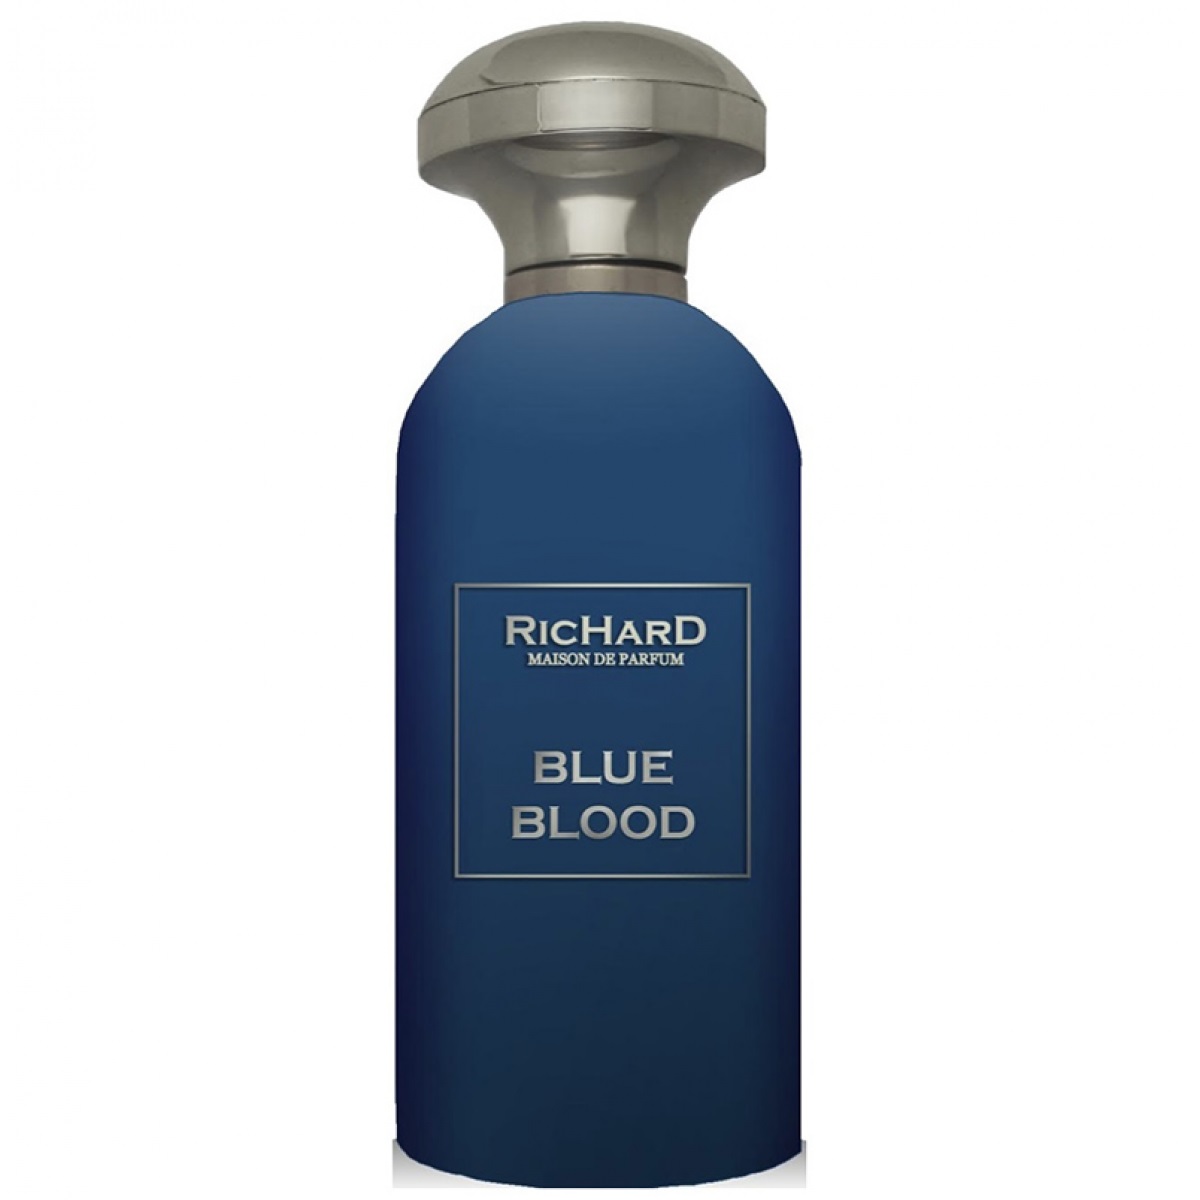 Поэзия парфюмерный блуд. Richard Blue Blood парфюмерная вода 100 мл. Духи Richard Maison de Parfum Blue Blood.